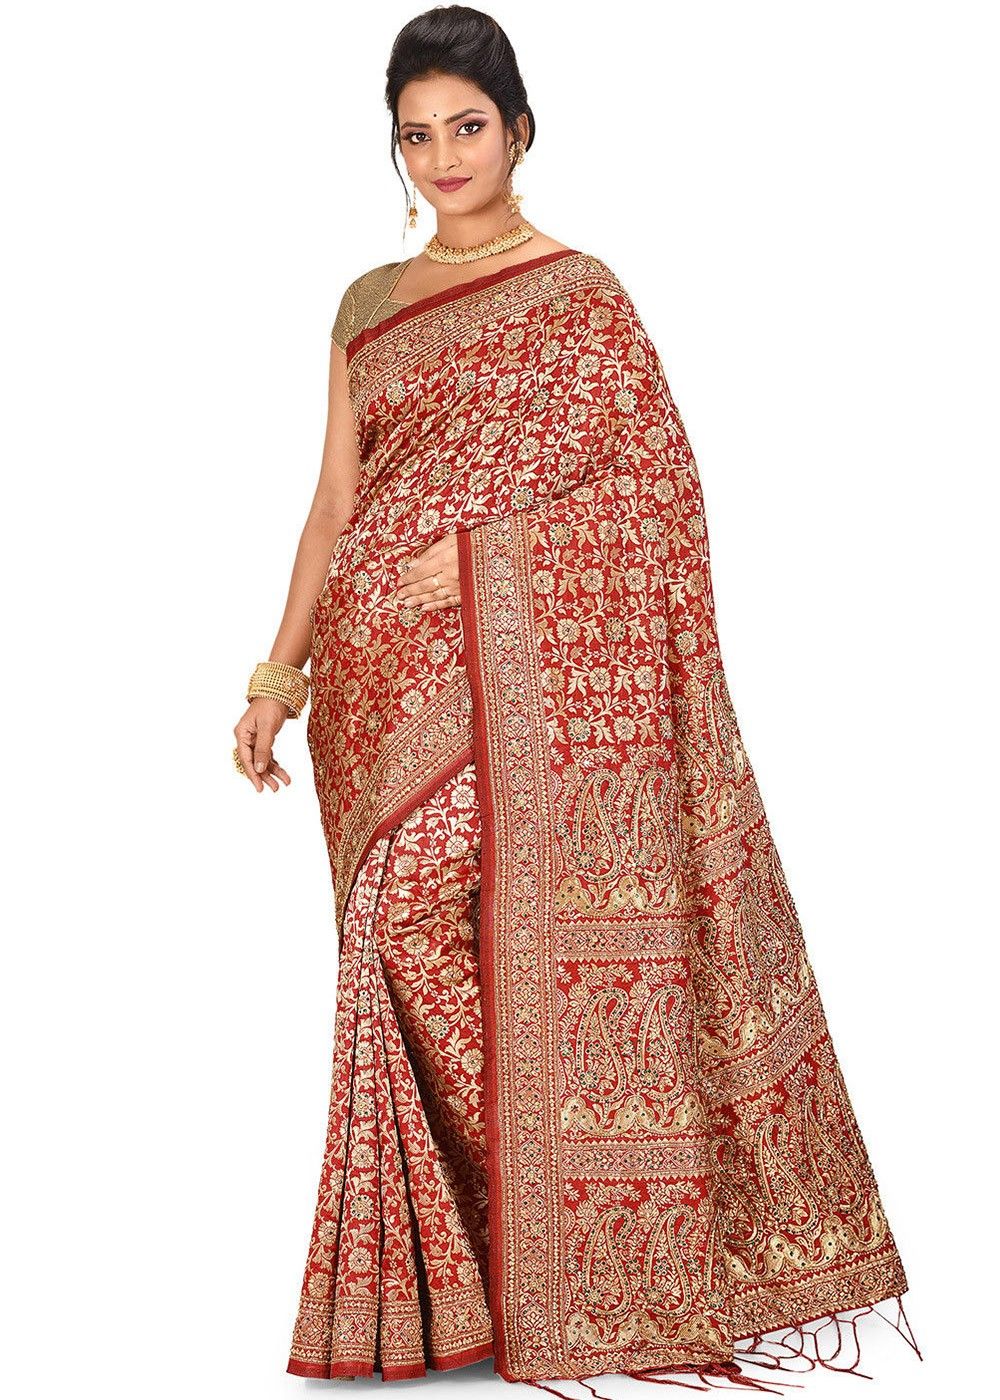 Navy BLue and Red color soft silk kanchipuram sarees with border less sarees  design -KASS0000165